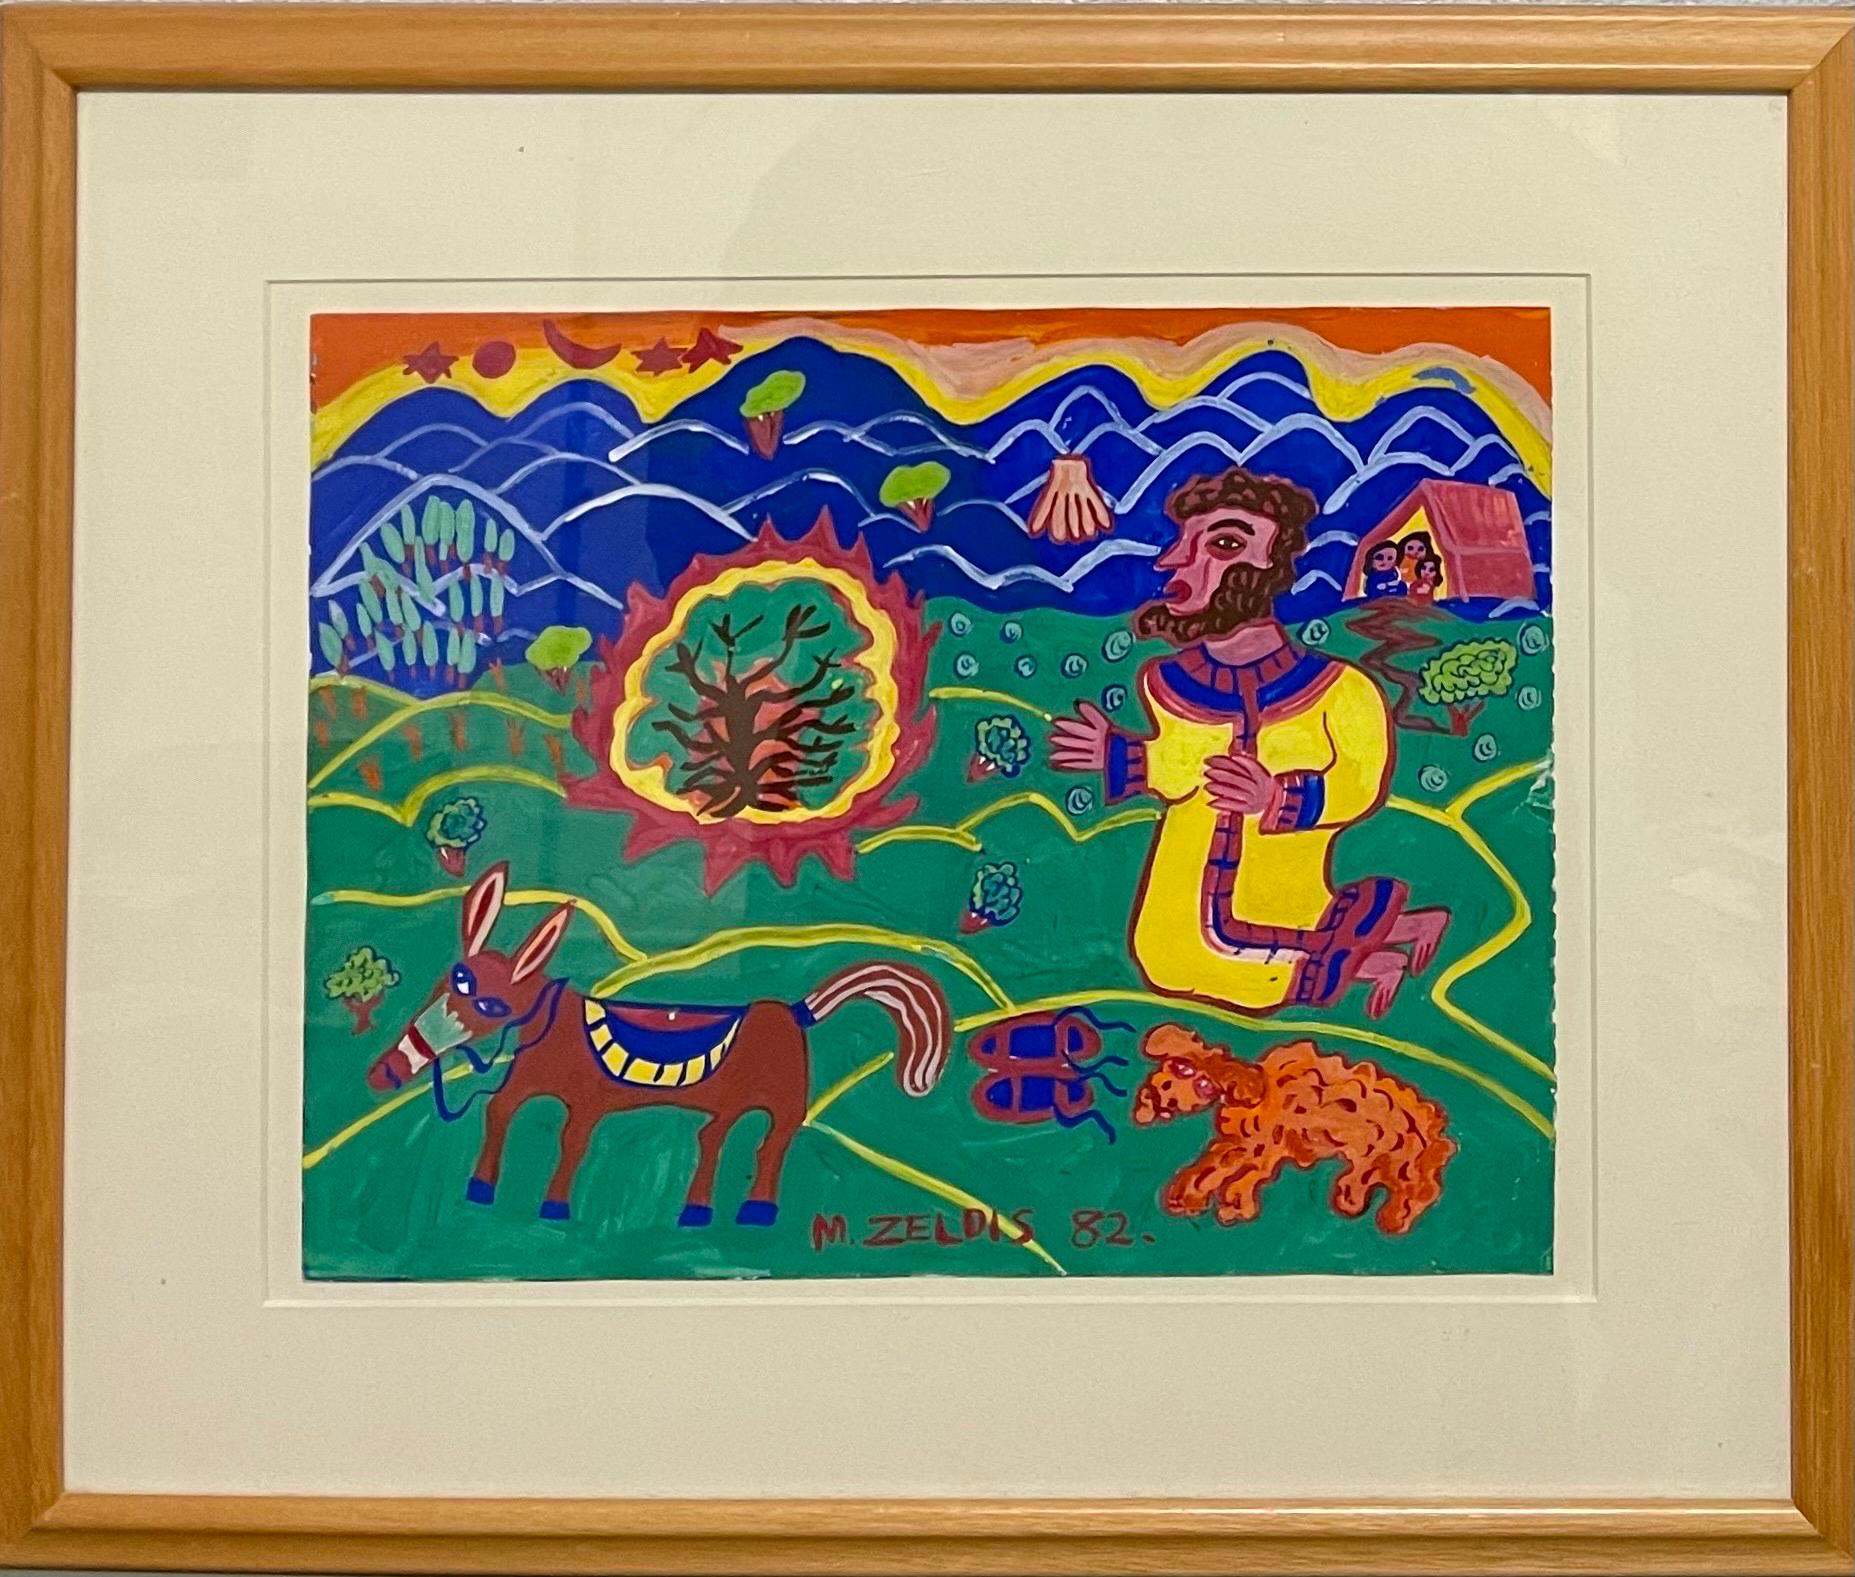 Malcah Zeldis Folk Art Gouache Moses Bible Painting Self Taught Outsider Artist 